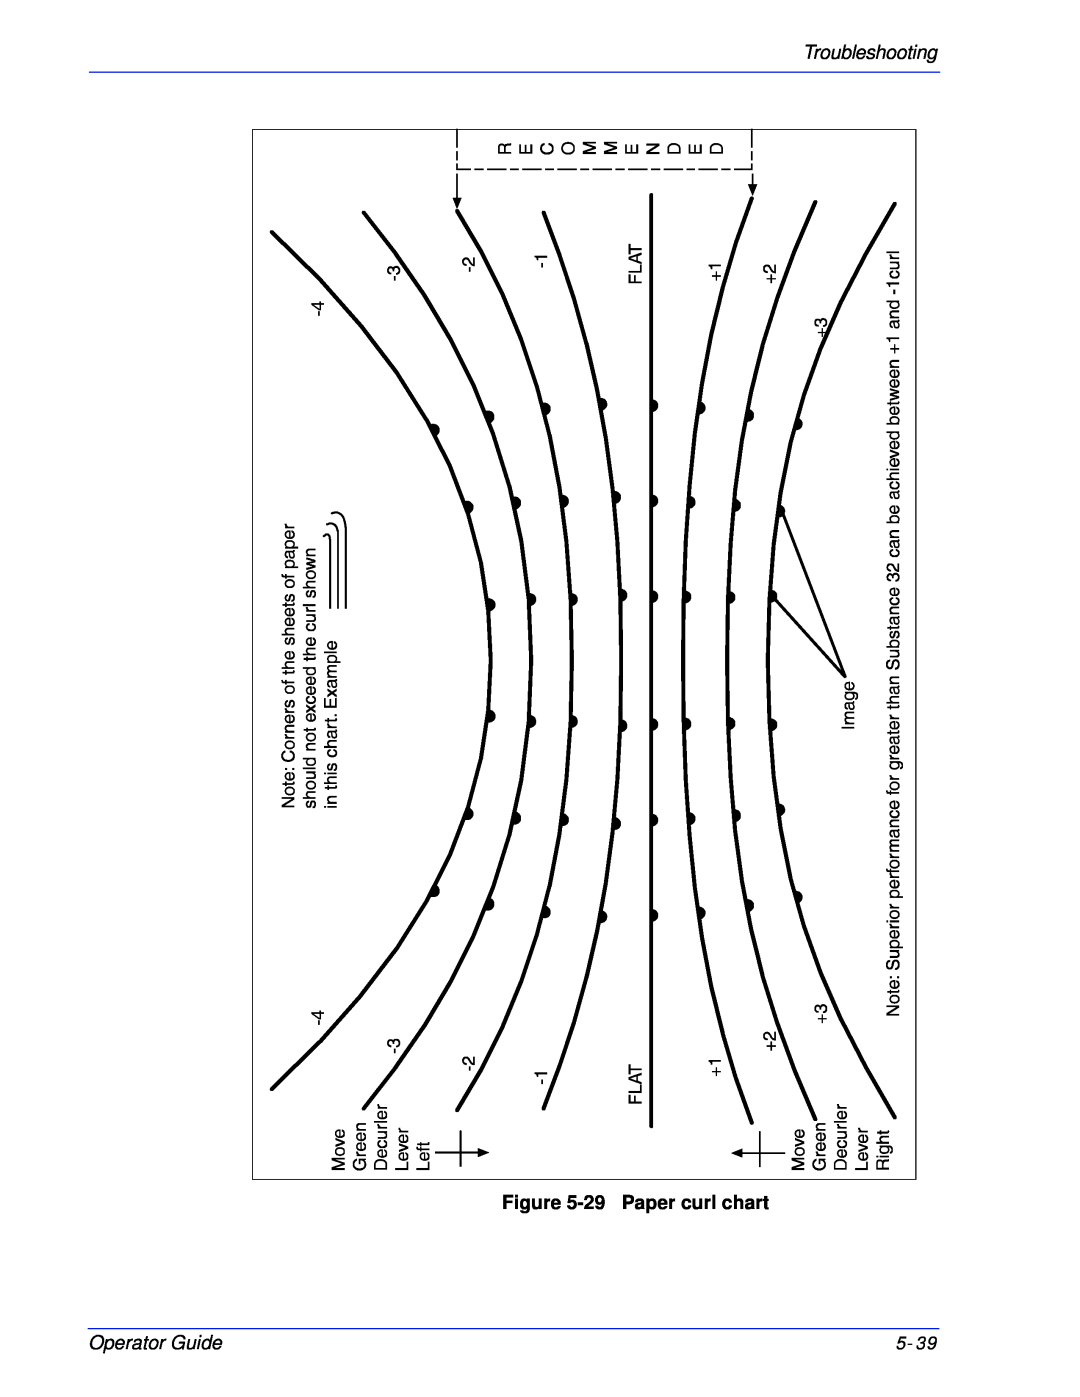 Xerox 180 EPS, 100 manual 29Paper curl chart, Operator Guide, Troubleshooting 